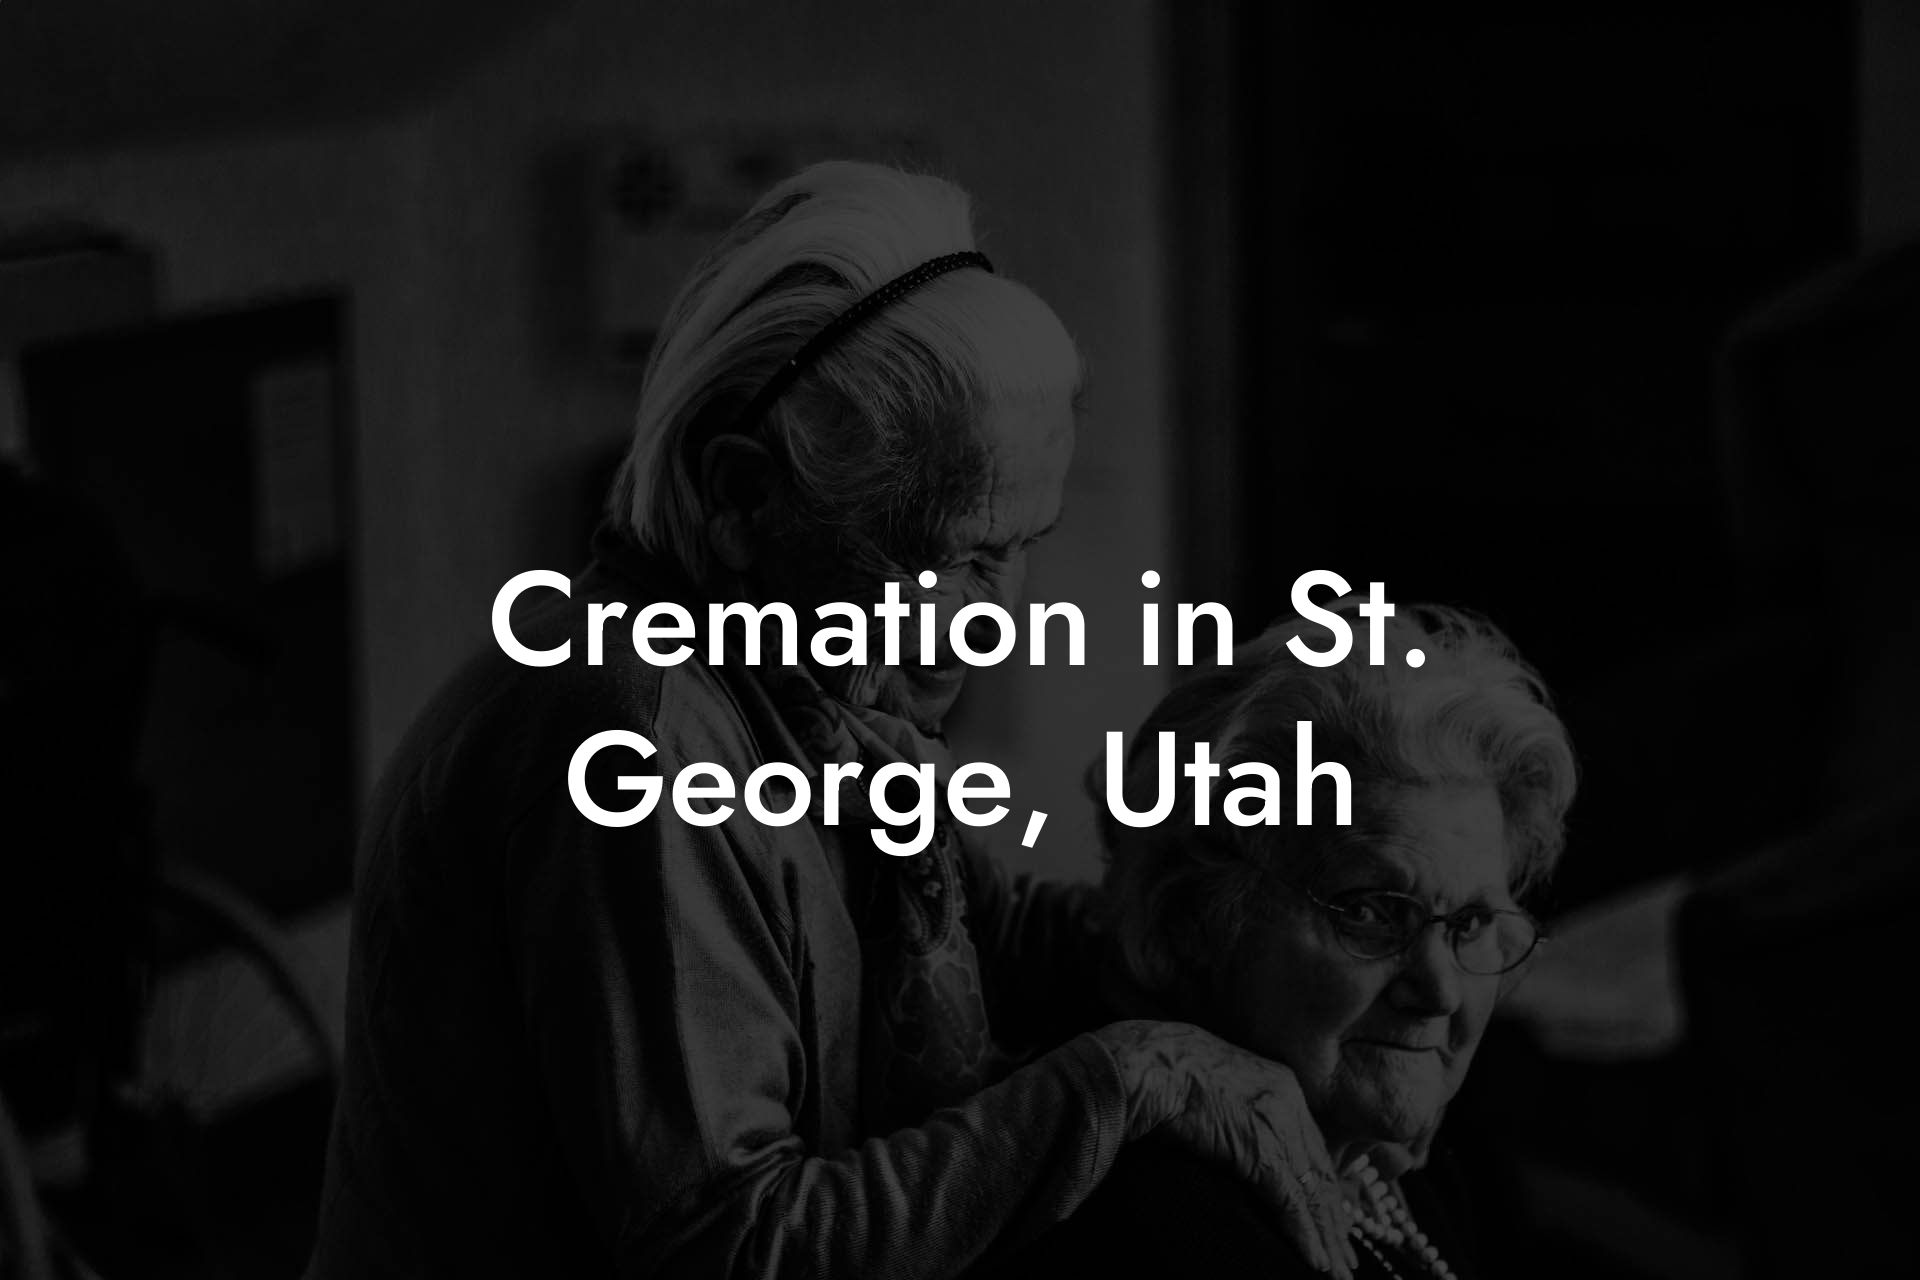 Cremation in St. George, Utah